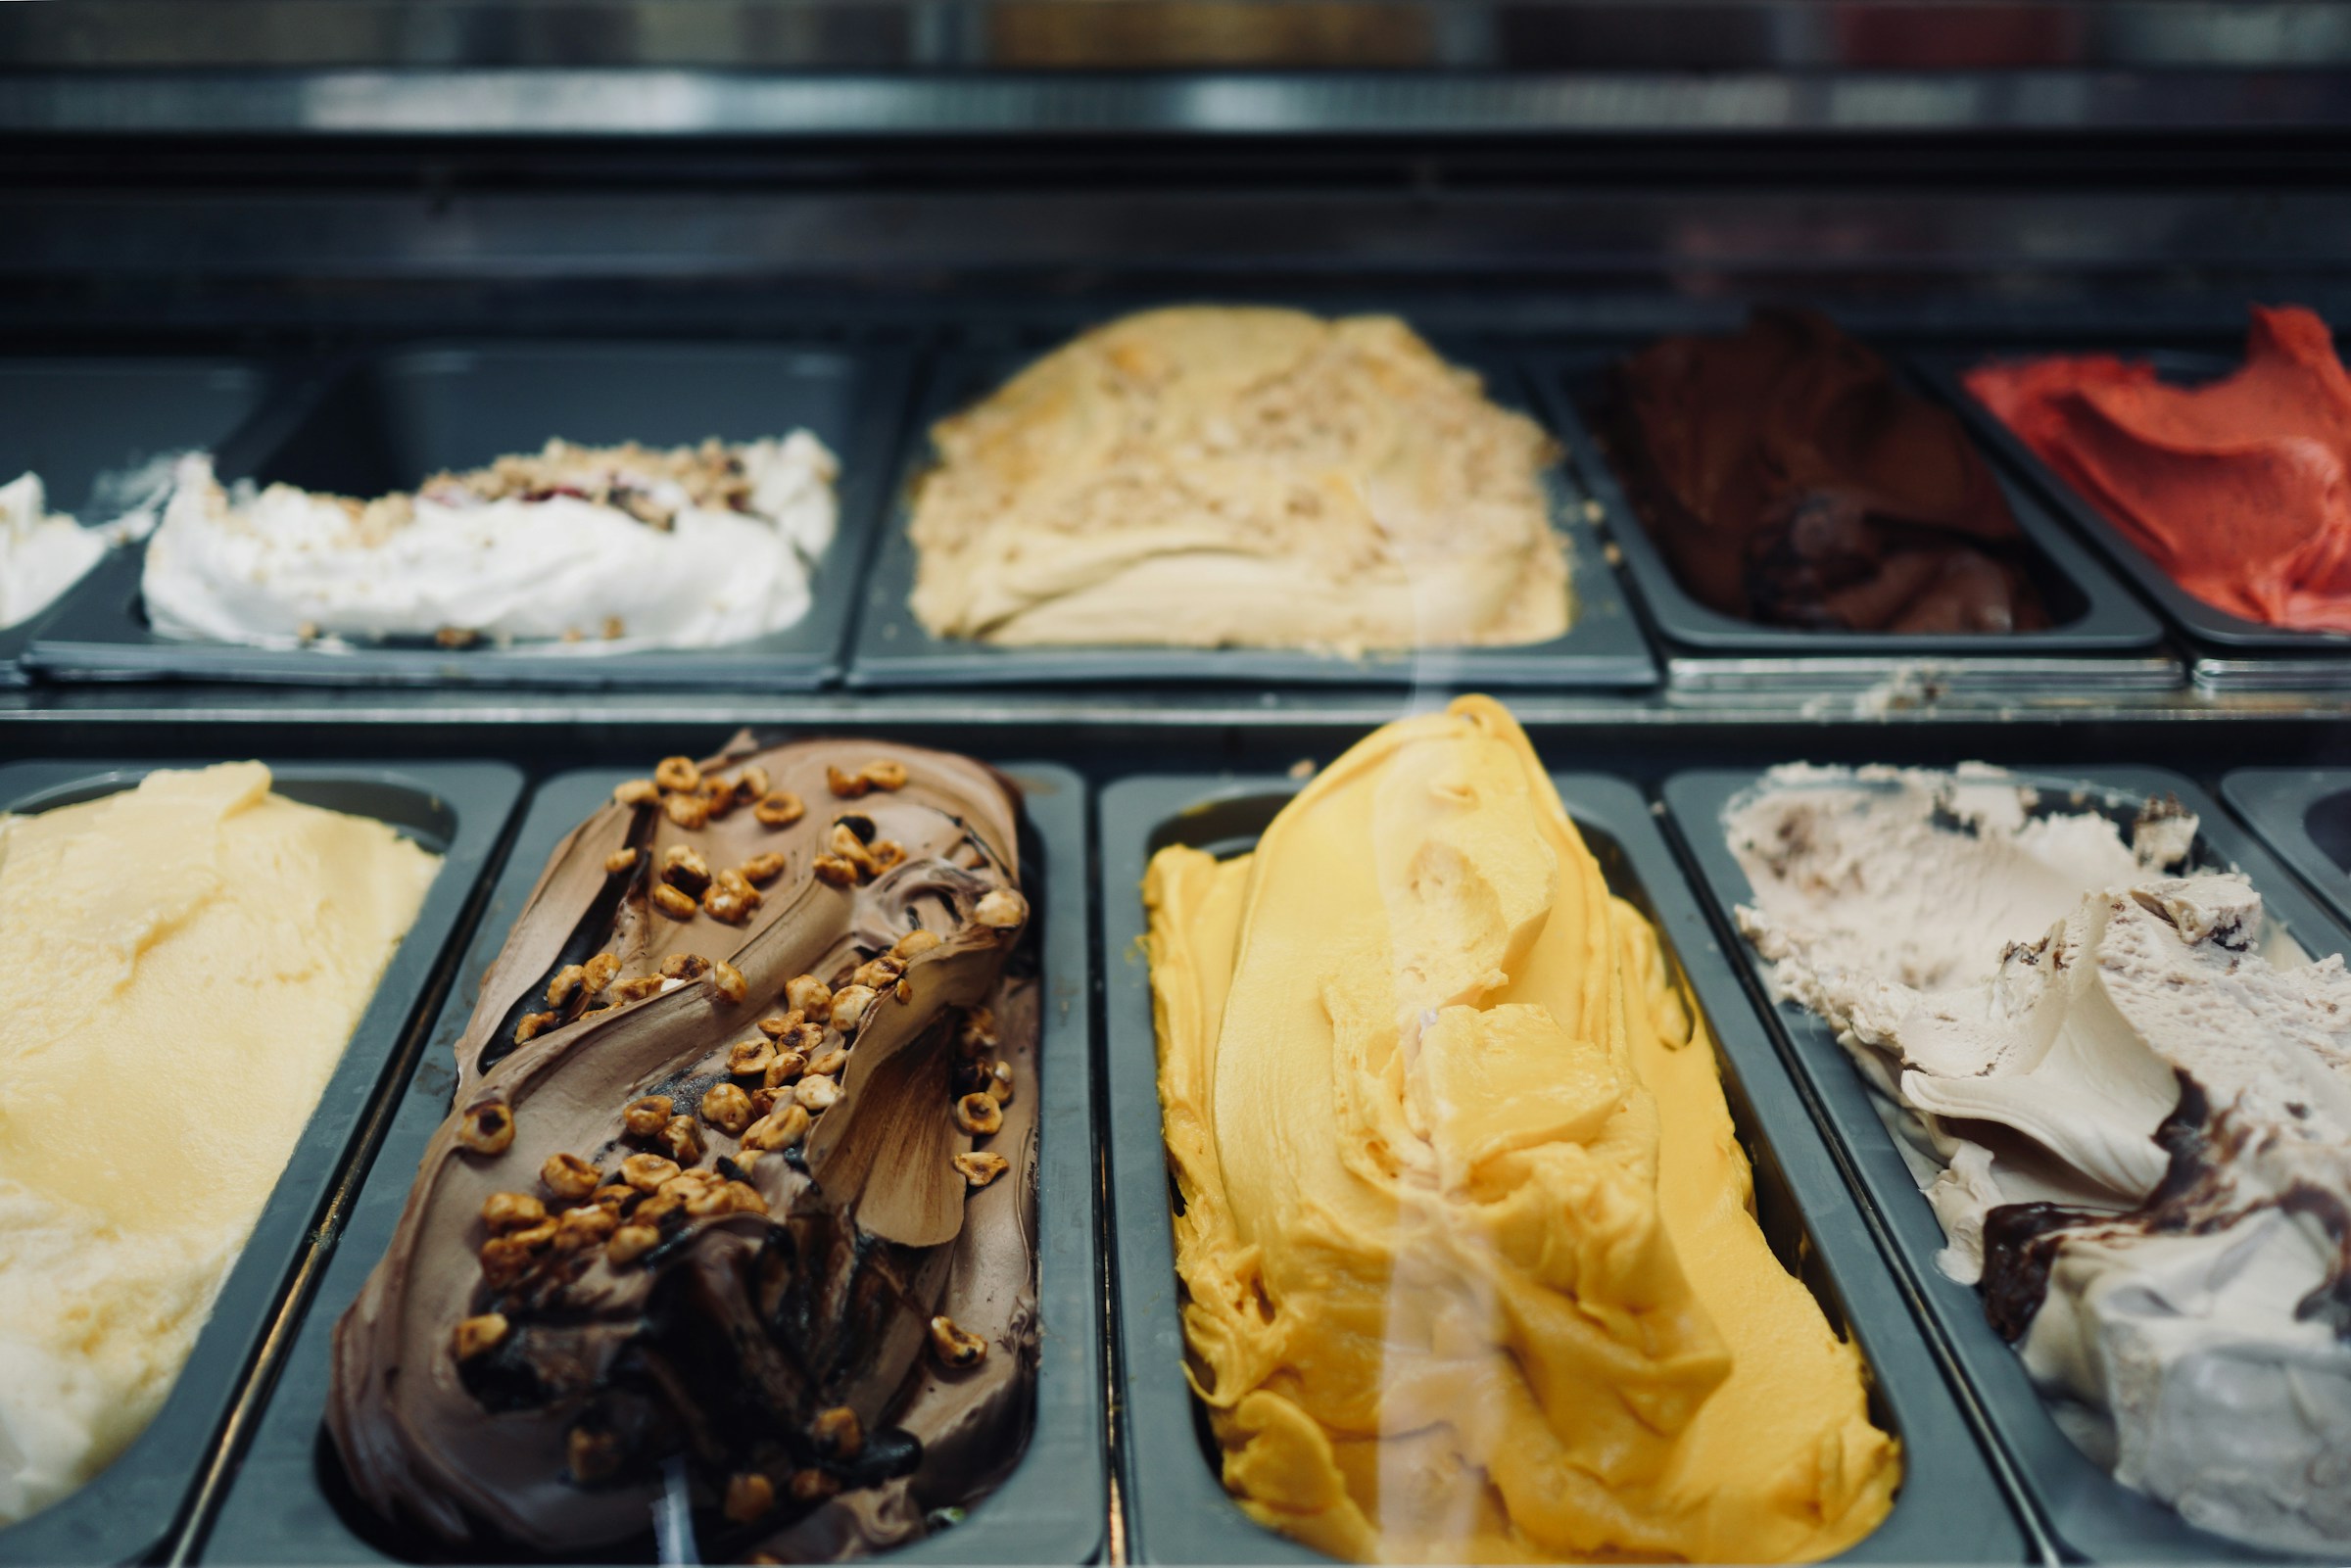 An ice cream freezer | Source: Unsplash